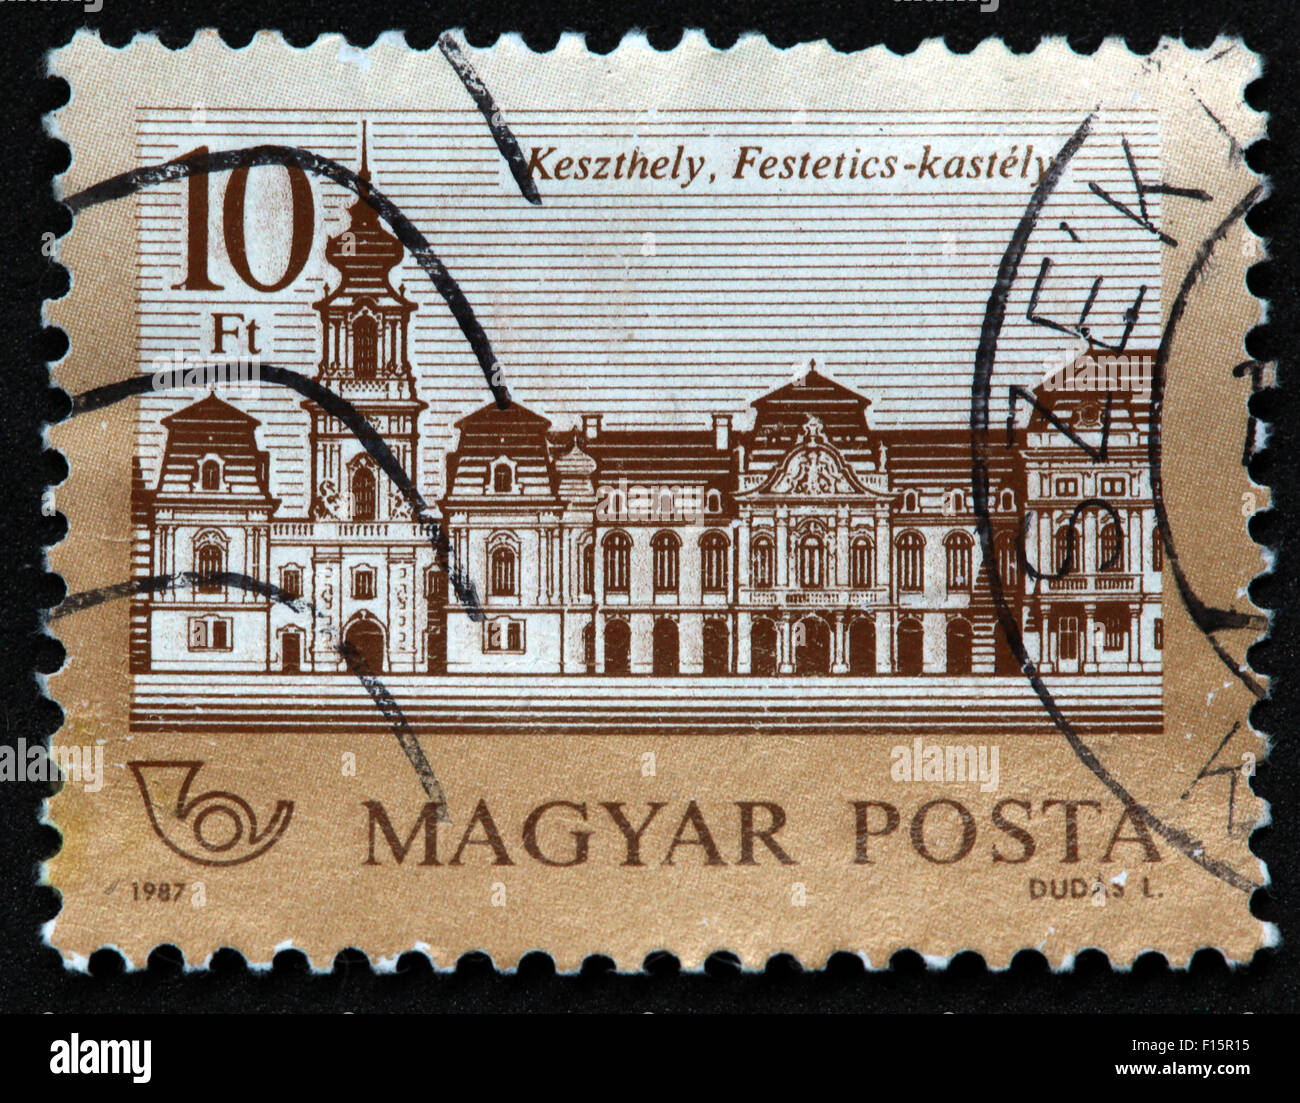 Magyar Posta 1987 Dudas 10ft maison du château Keszthely Festetics-kastely SZE SZEK Stamp, Hongrie Banque D'Images